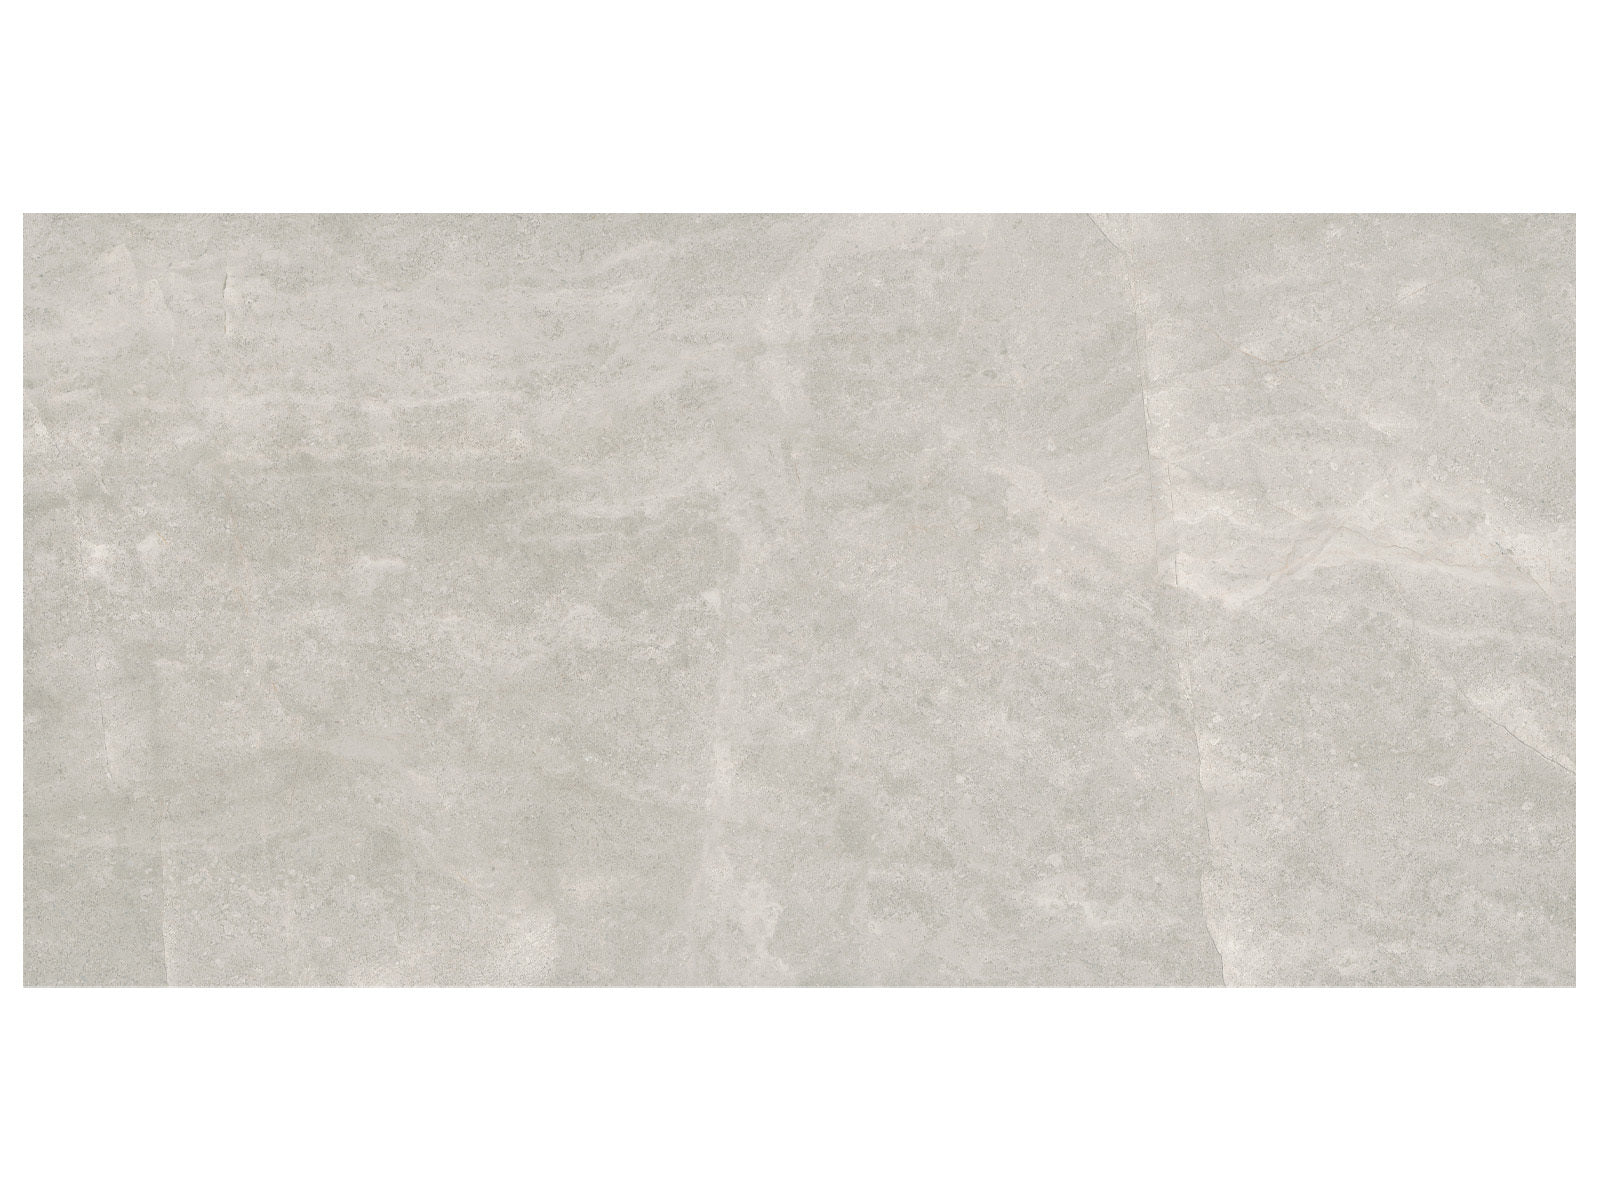 surface group anatolia marble anciano grigio natural stone field tile honed straight edge rectangle 18х36